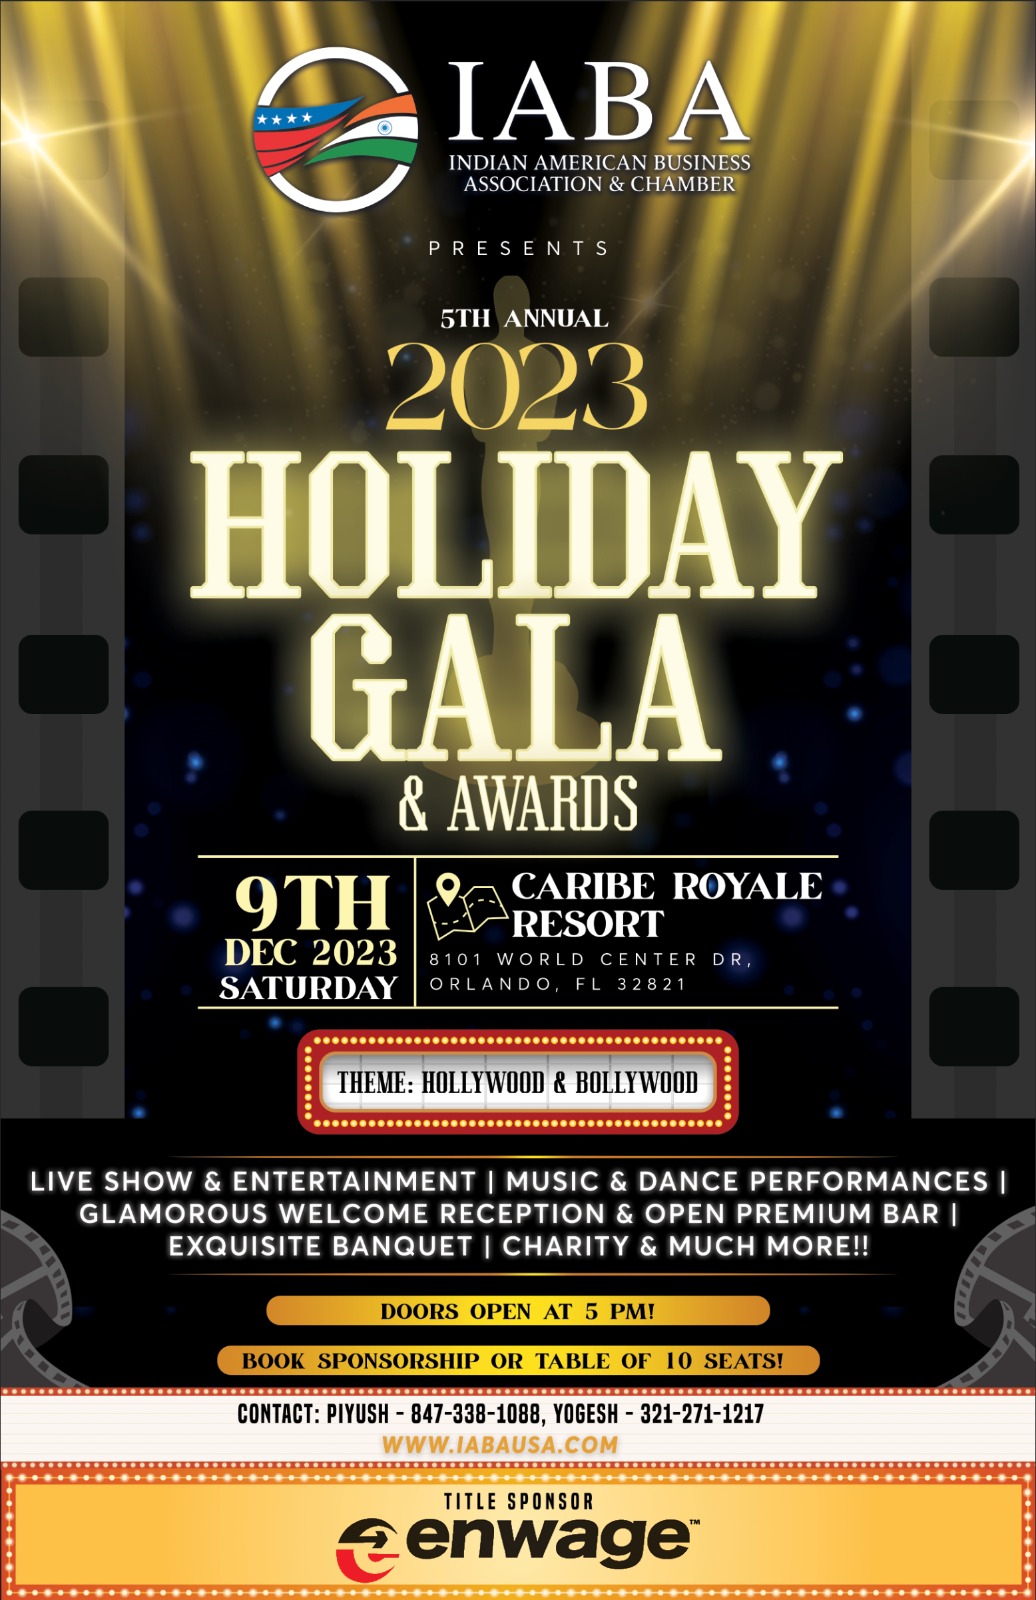 IABA Holiday Gala & Awards 2023 (5th Annual)